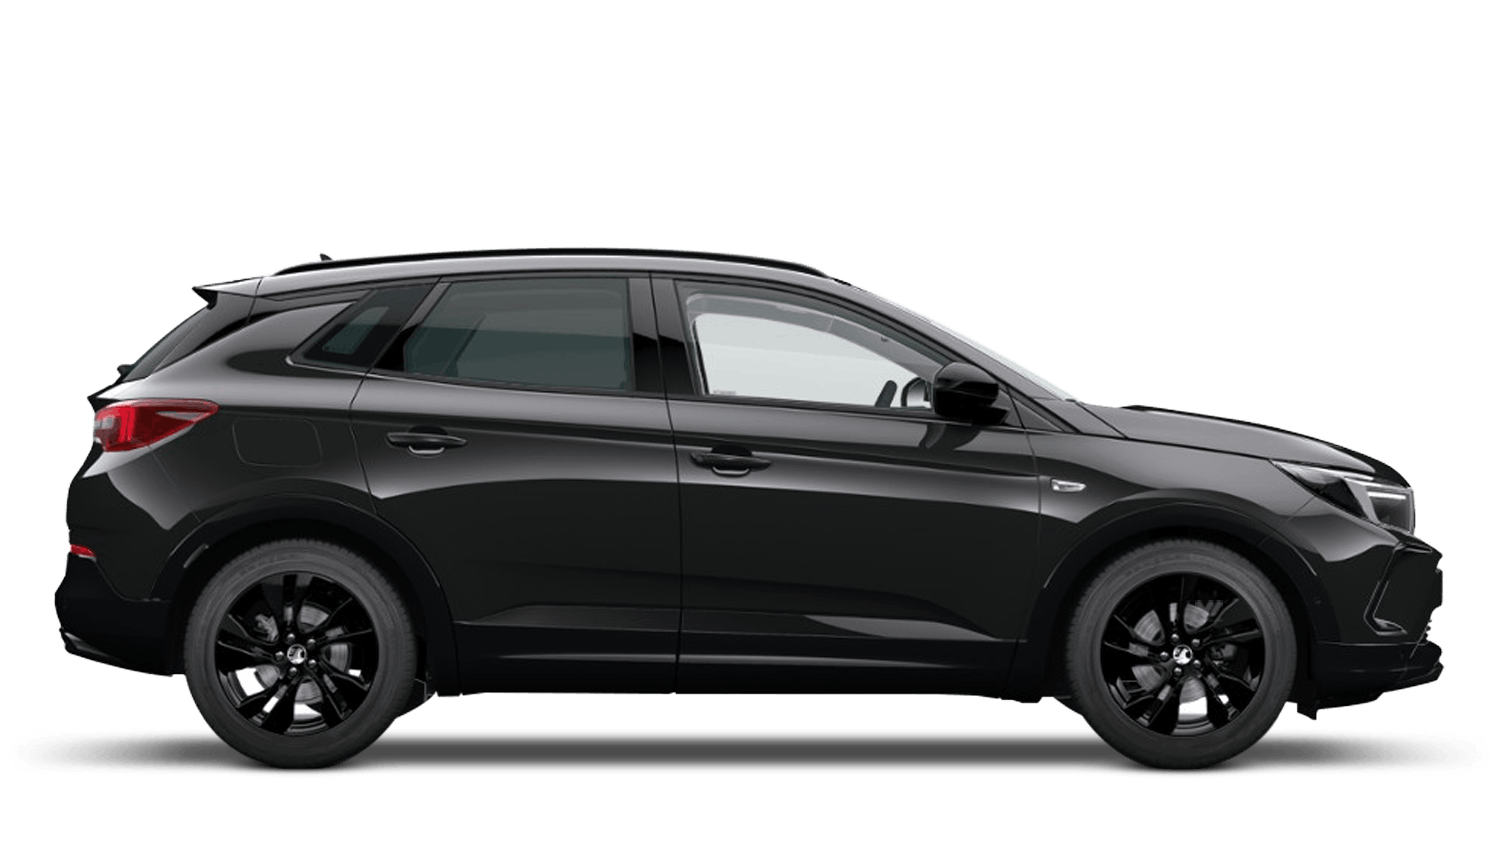 Carbon Black (Metallic) New Vauxhall Grandland